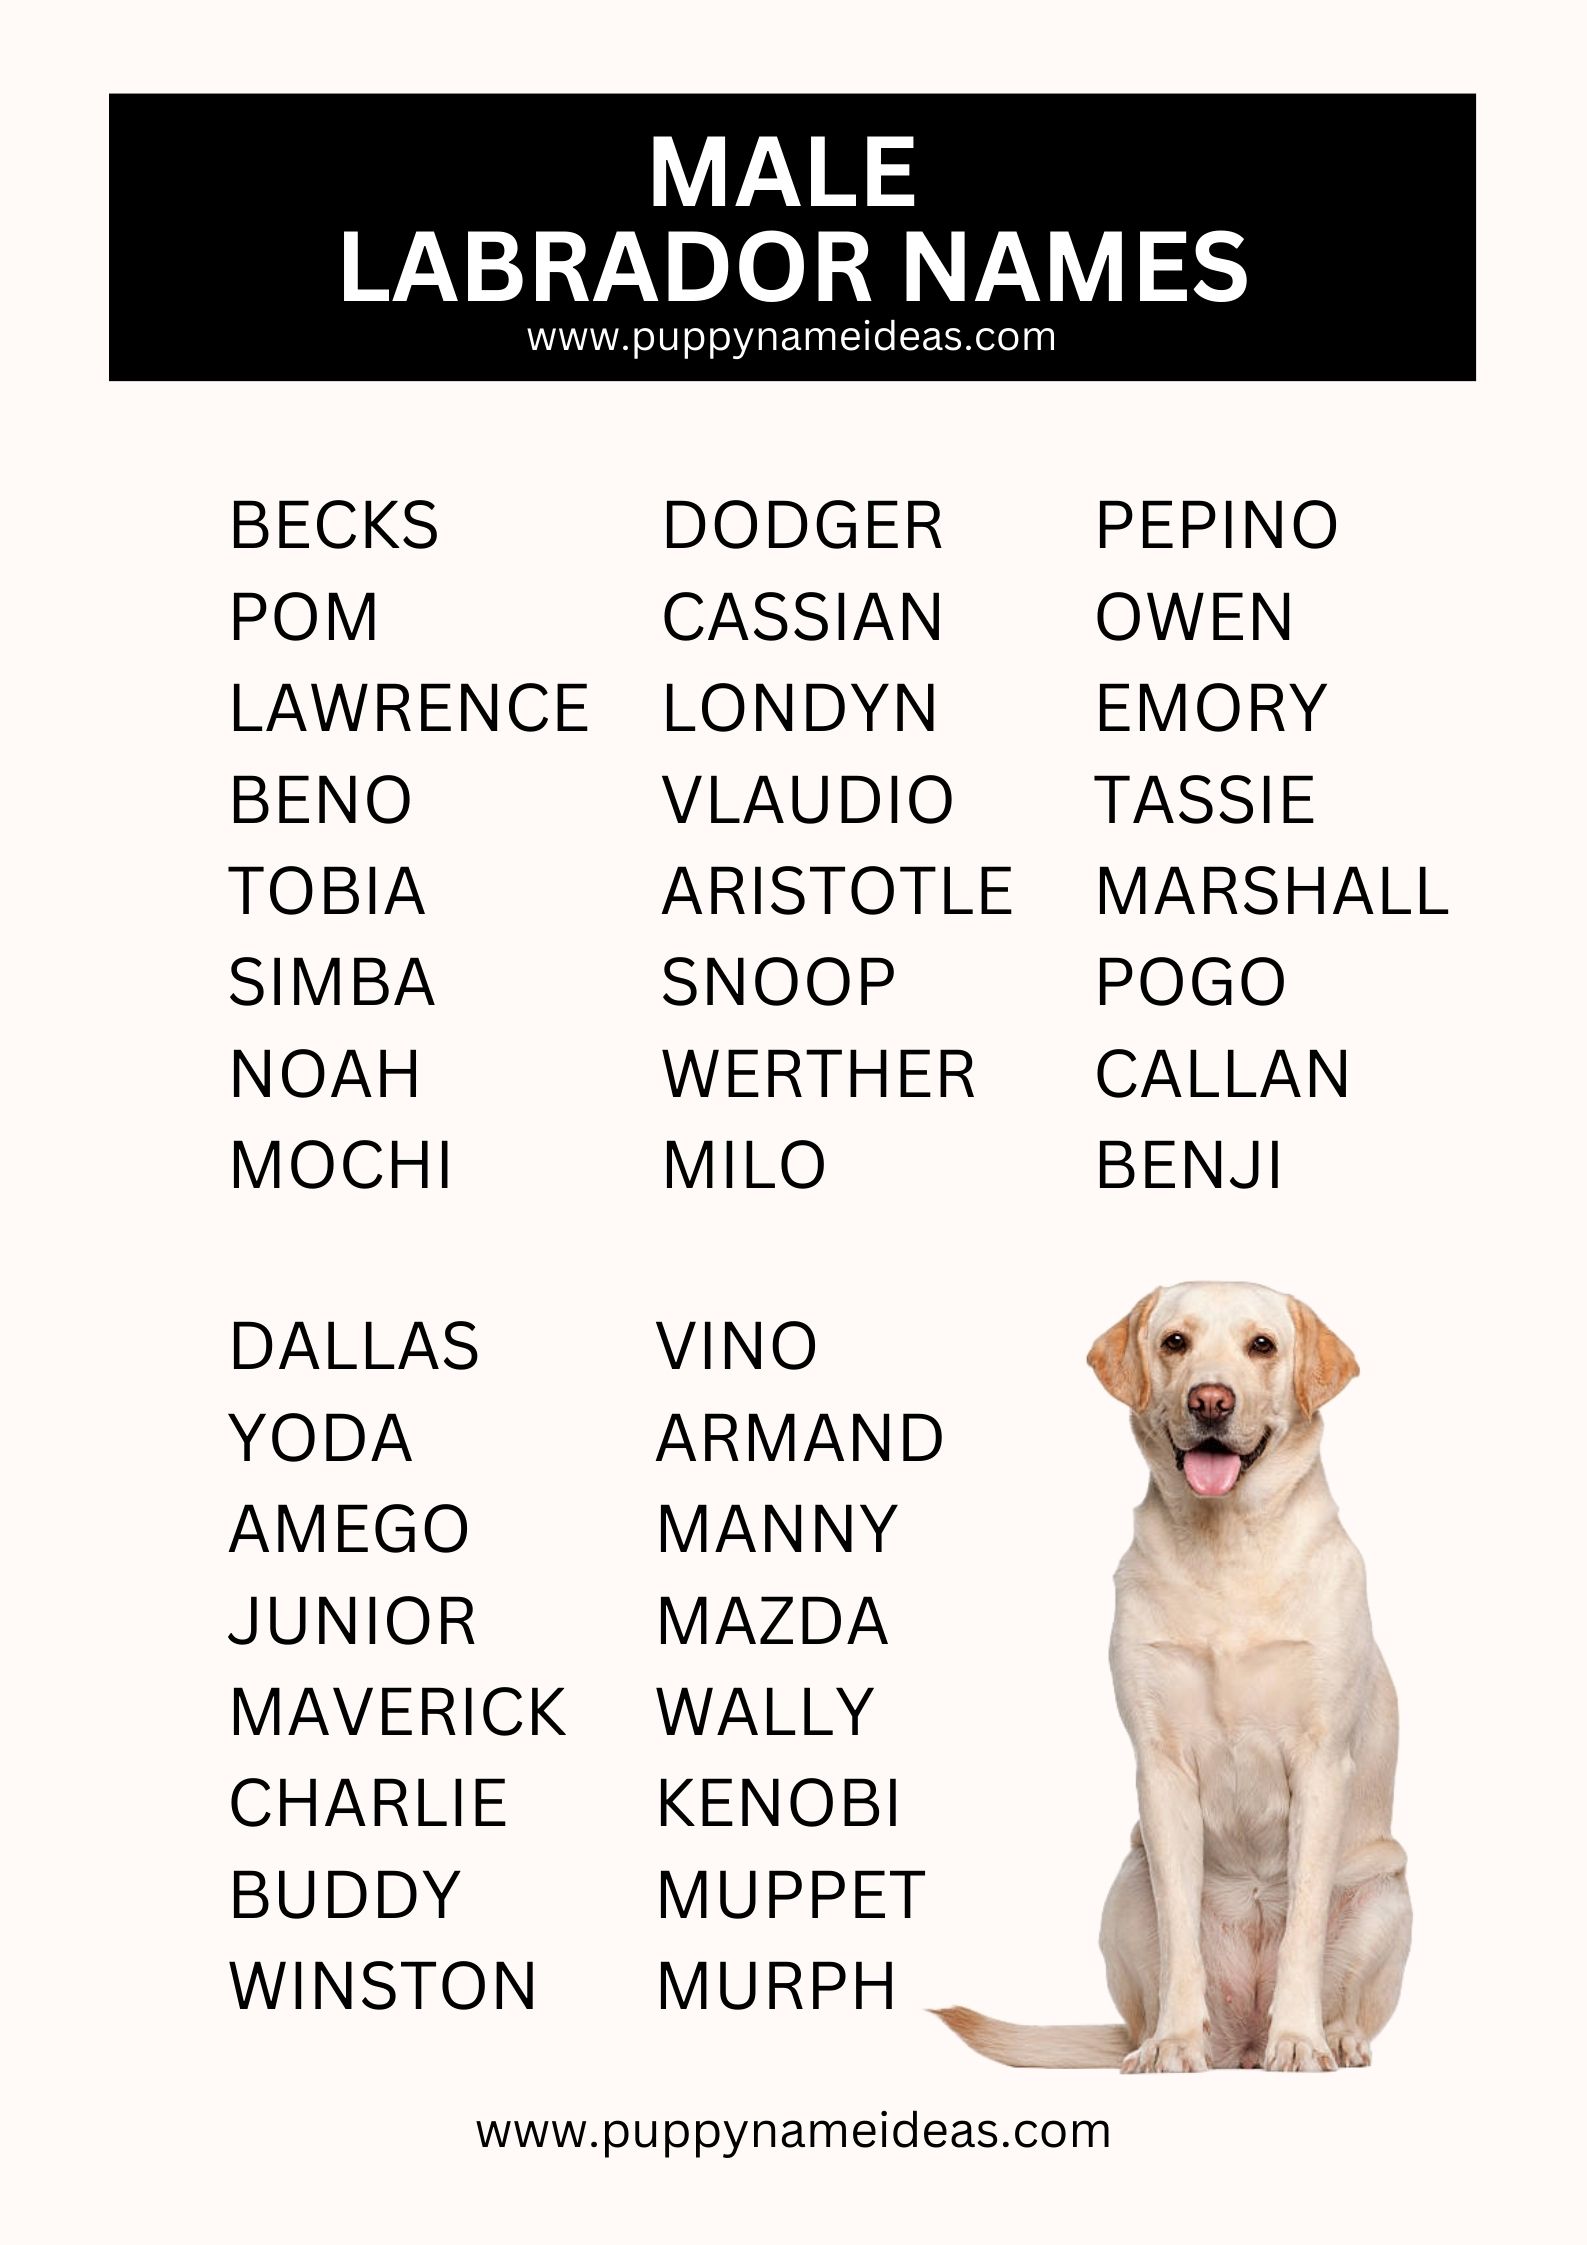 List Of Male Labrador Names